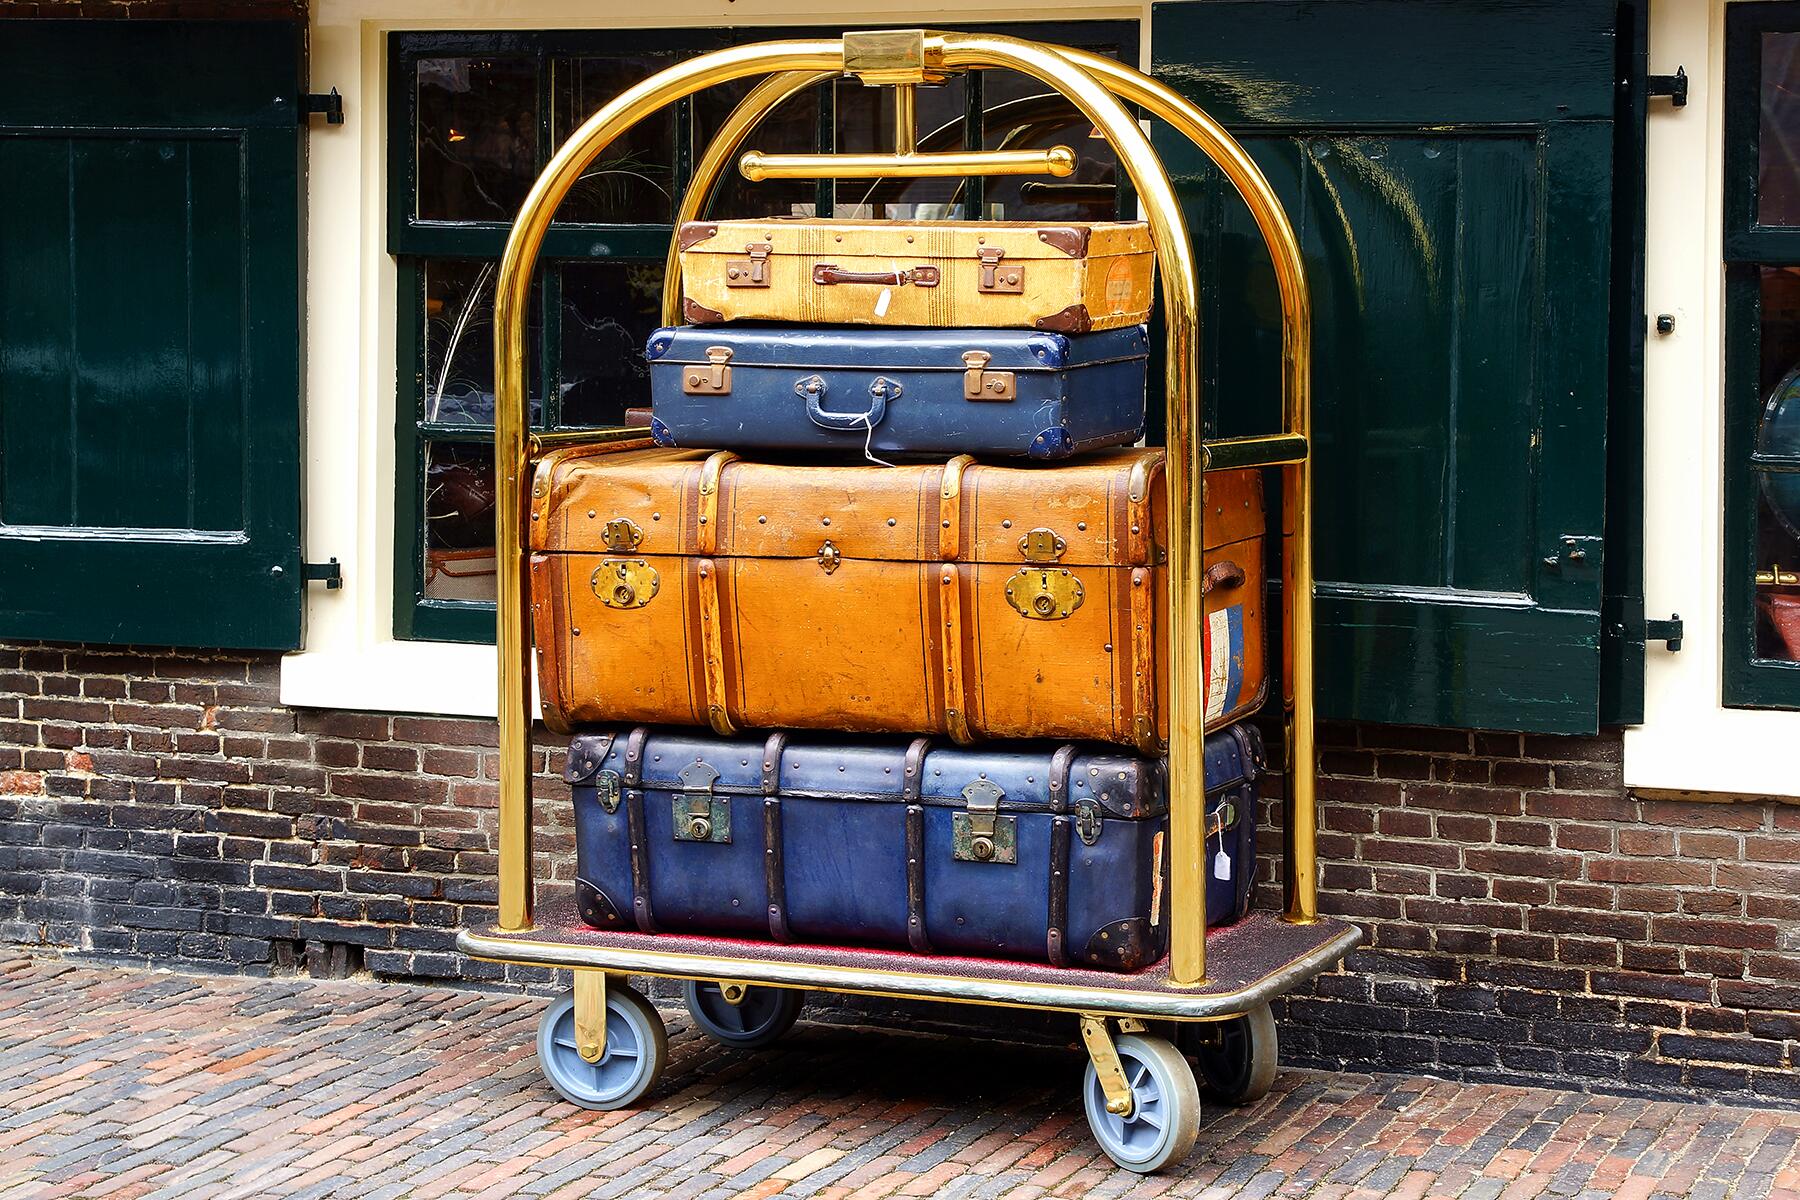 1800s travel bag